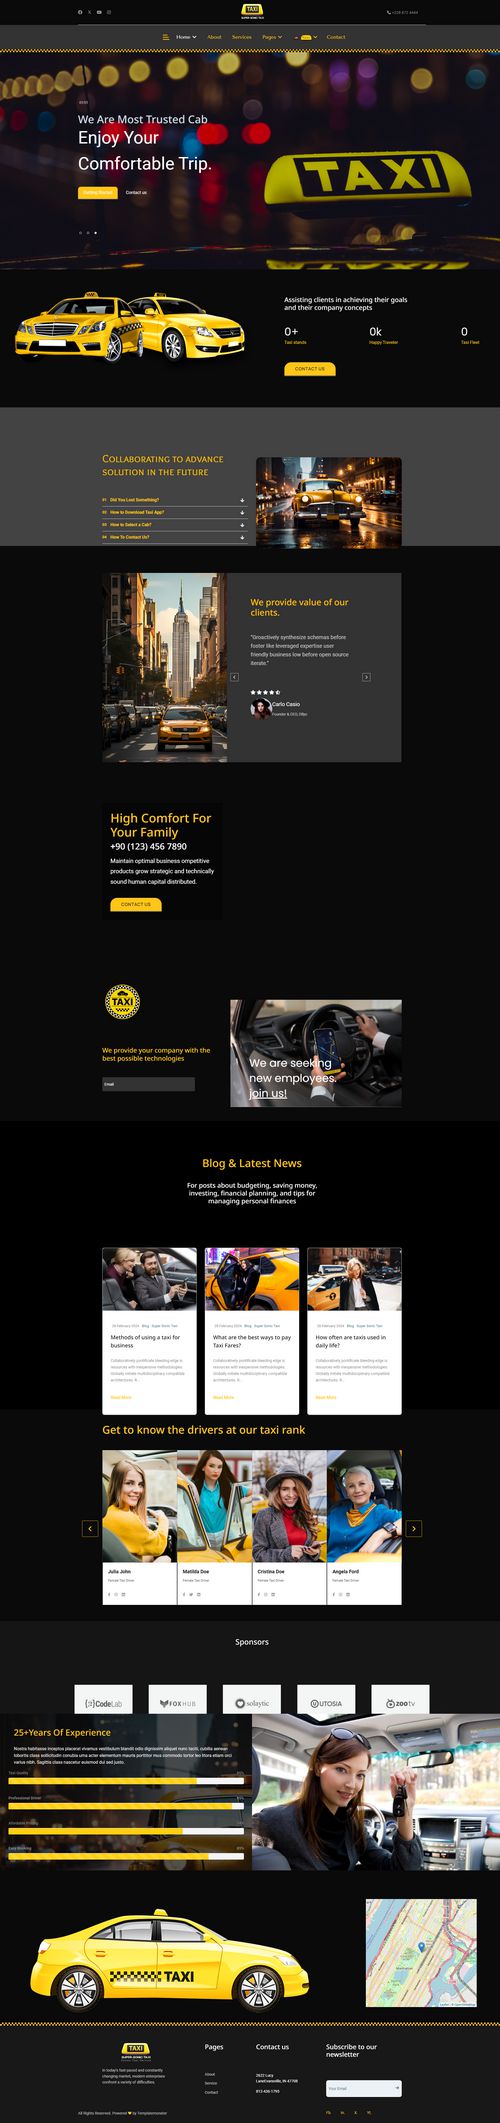 Taxi - Taxi Company and Cab Service Joomla Template